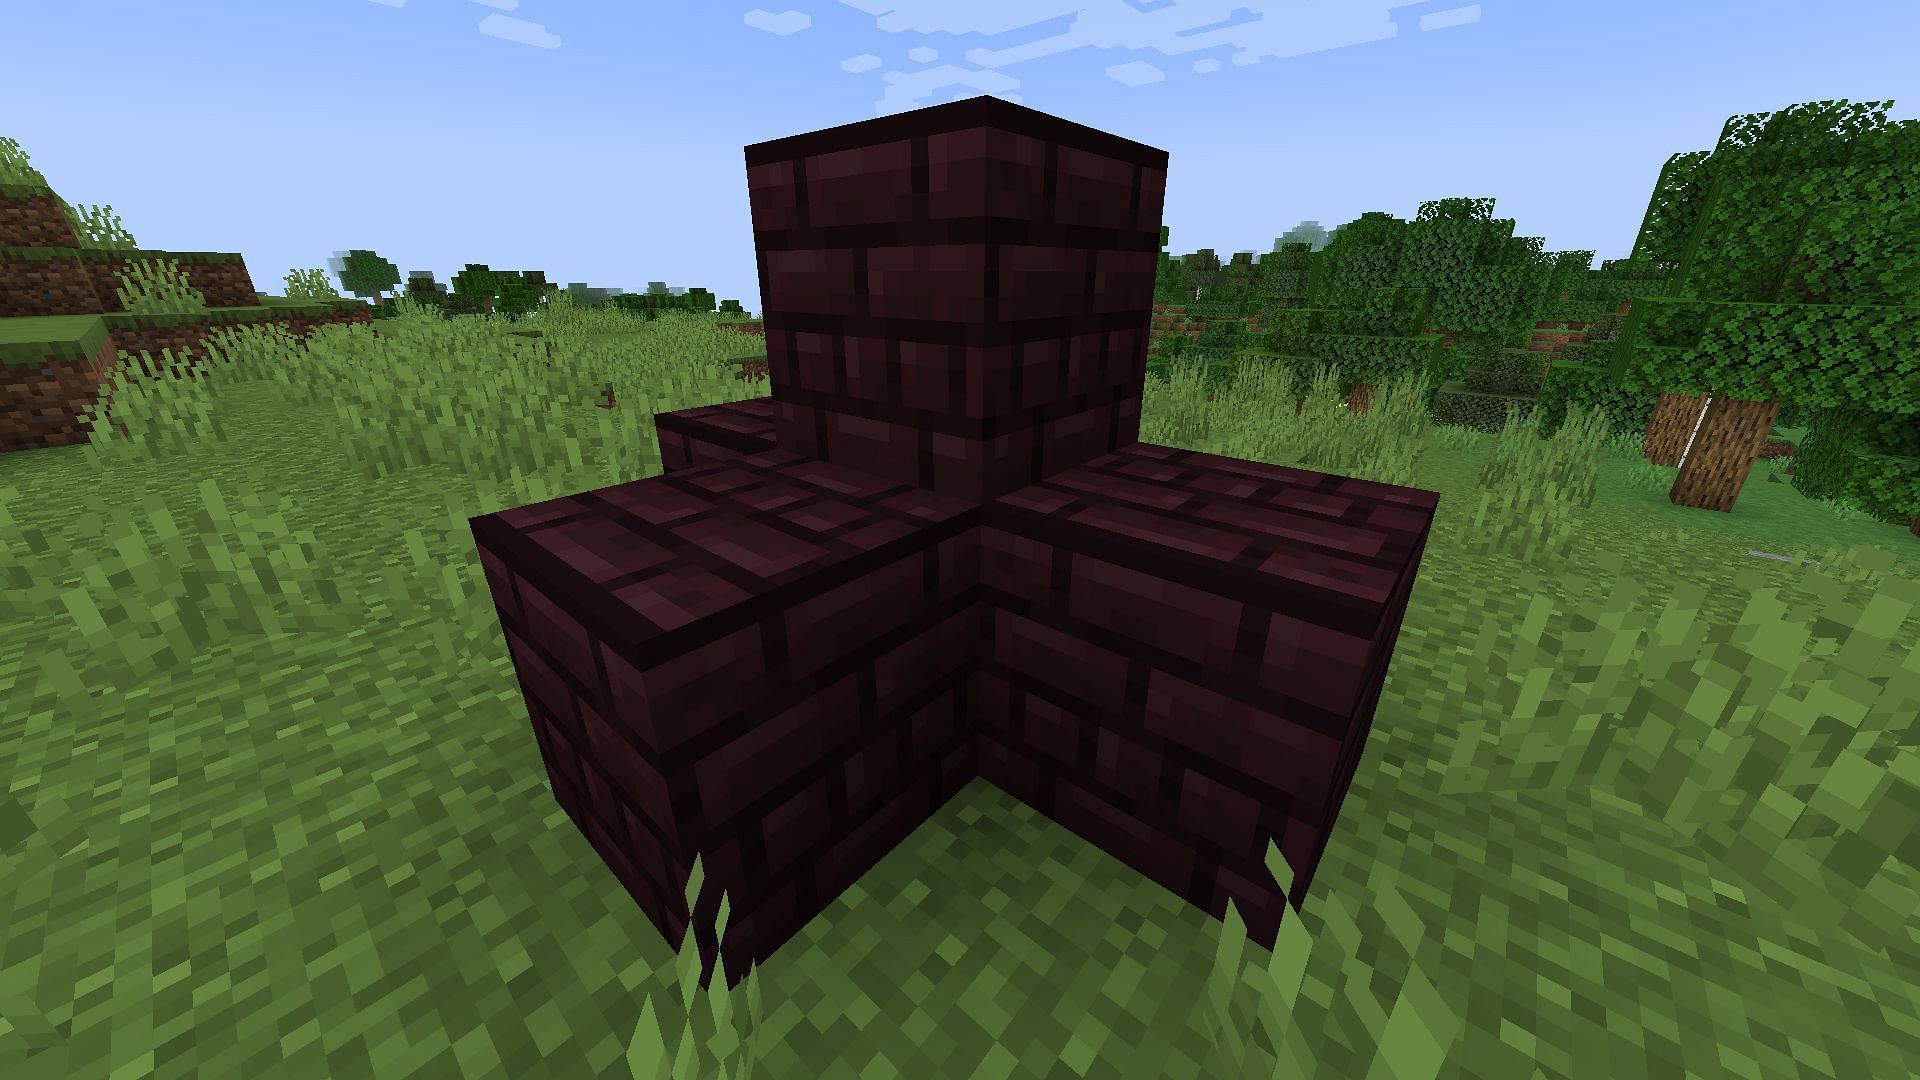 Nether bricks (Image via Minecraft 1.19 update)